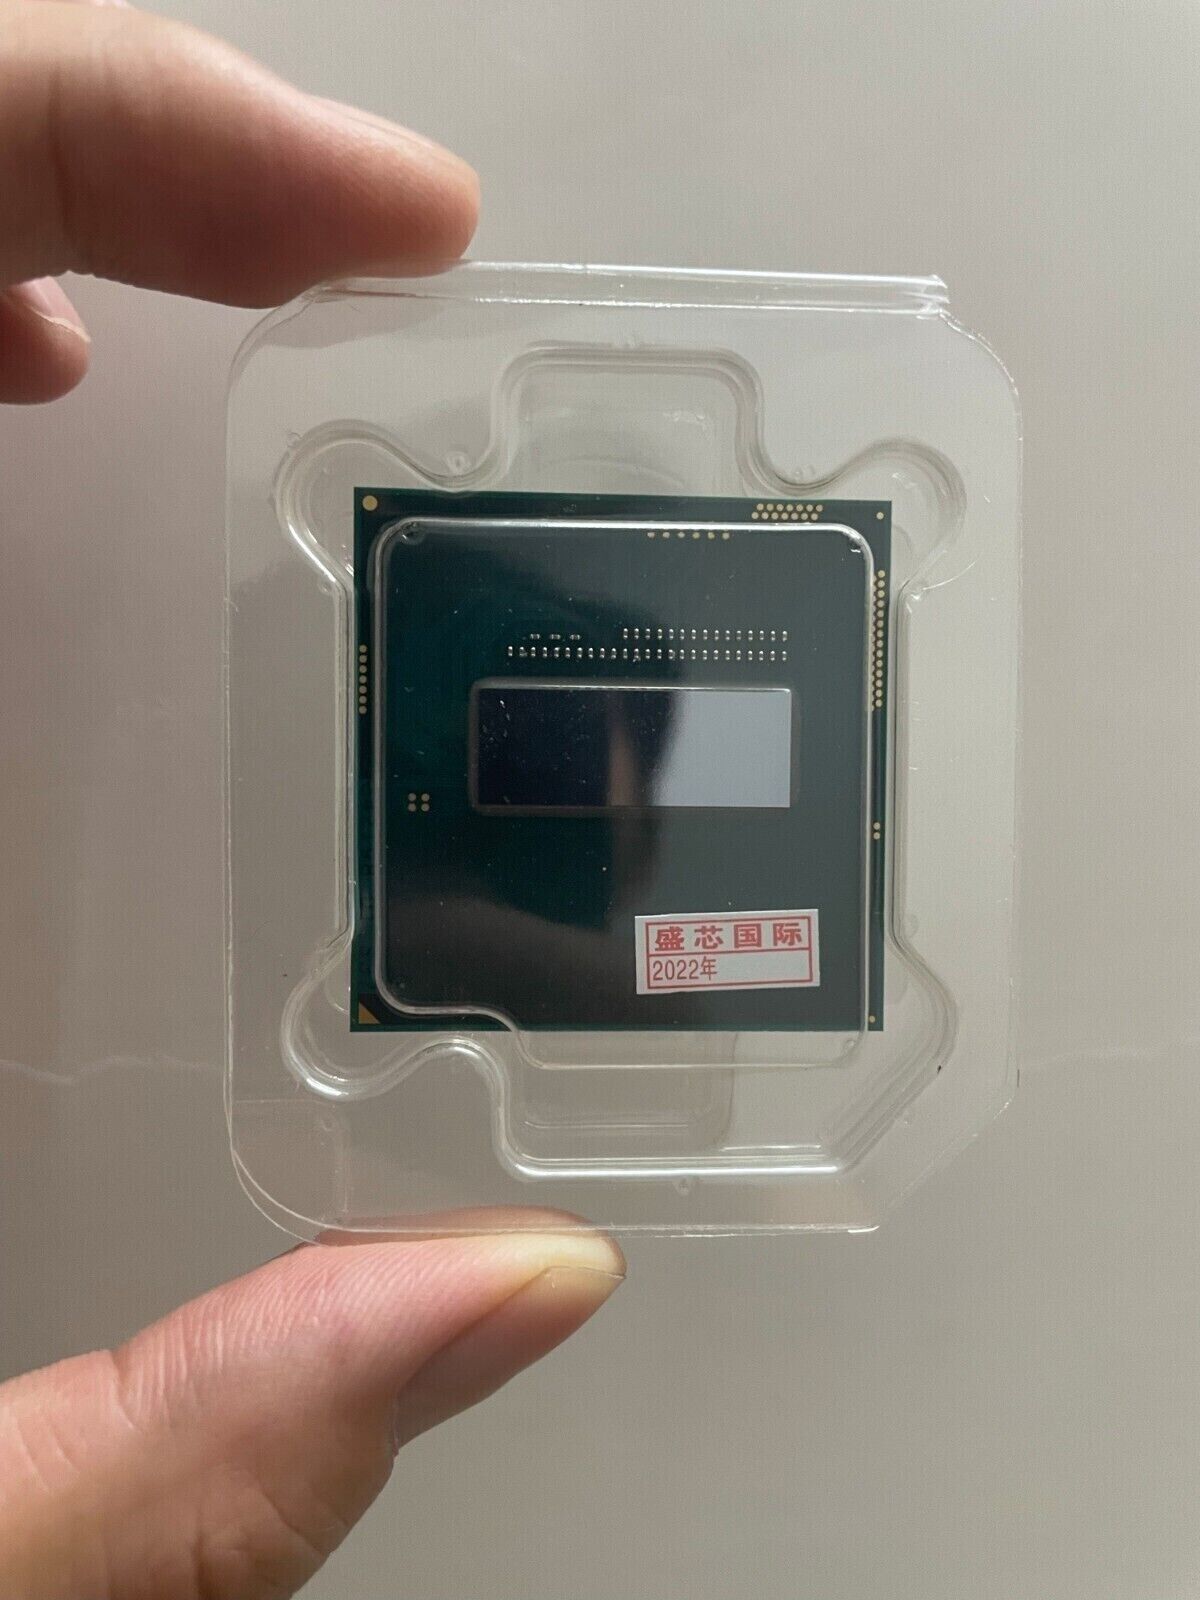 Intel Core i7-4940MX 3.1G/4.0G 8M SR1PP Mobile CPU Processor